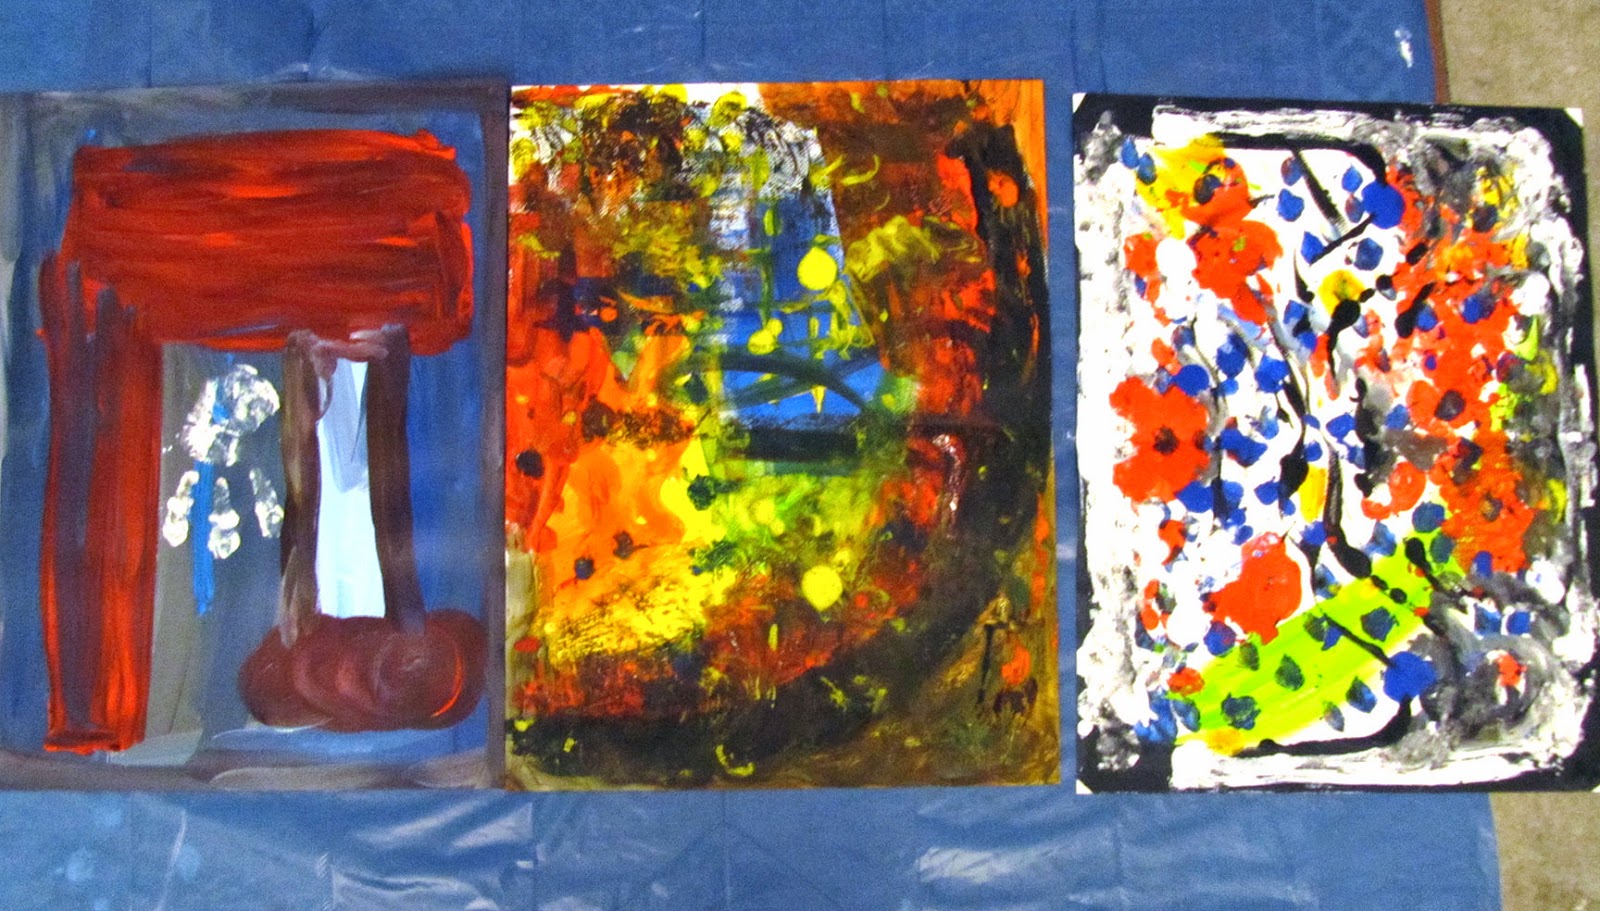 all three paintings